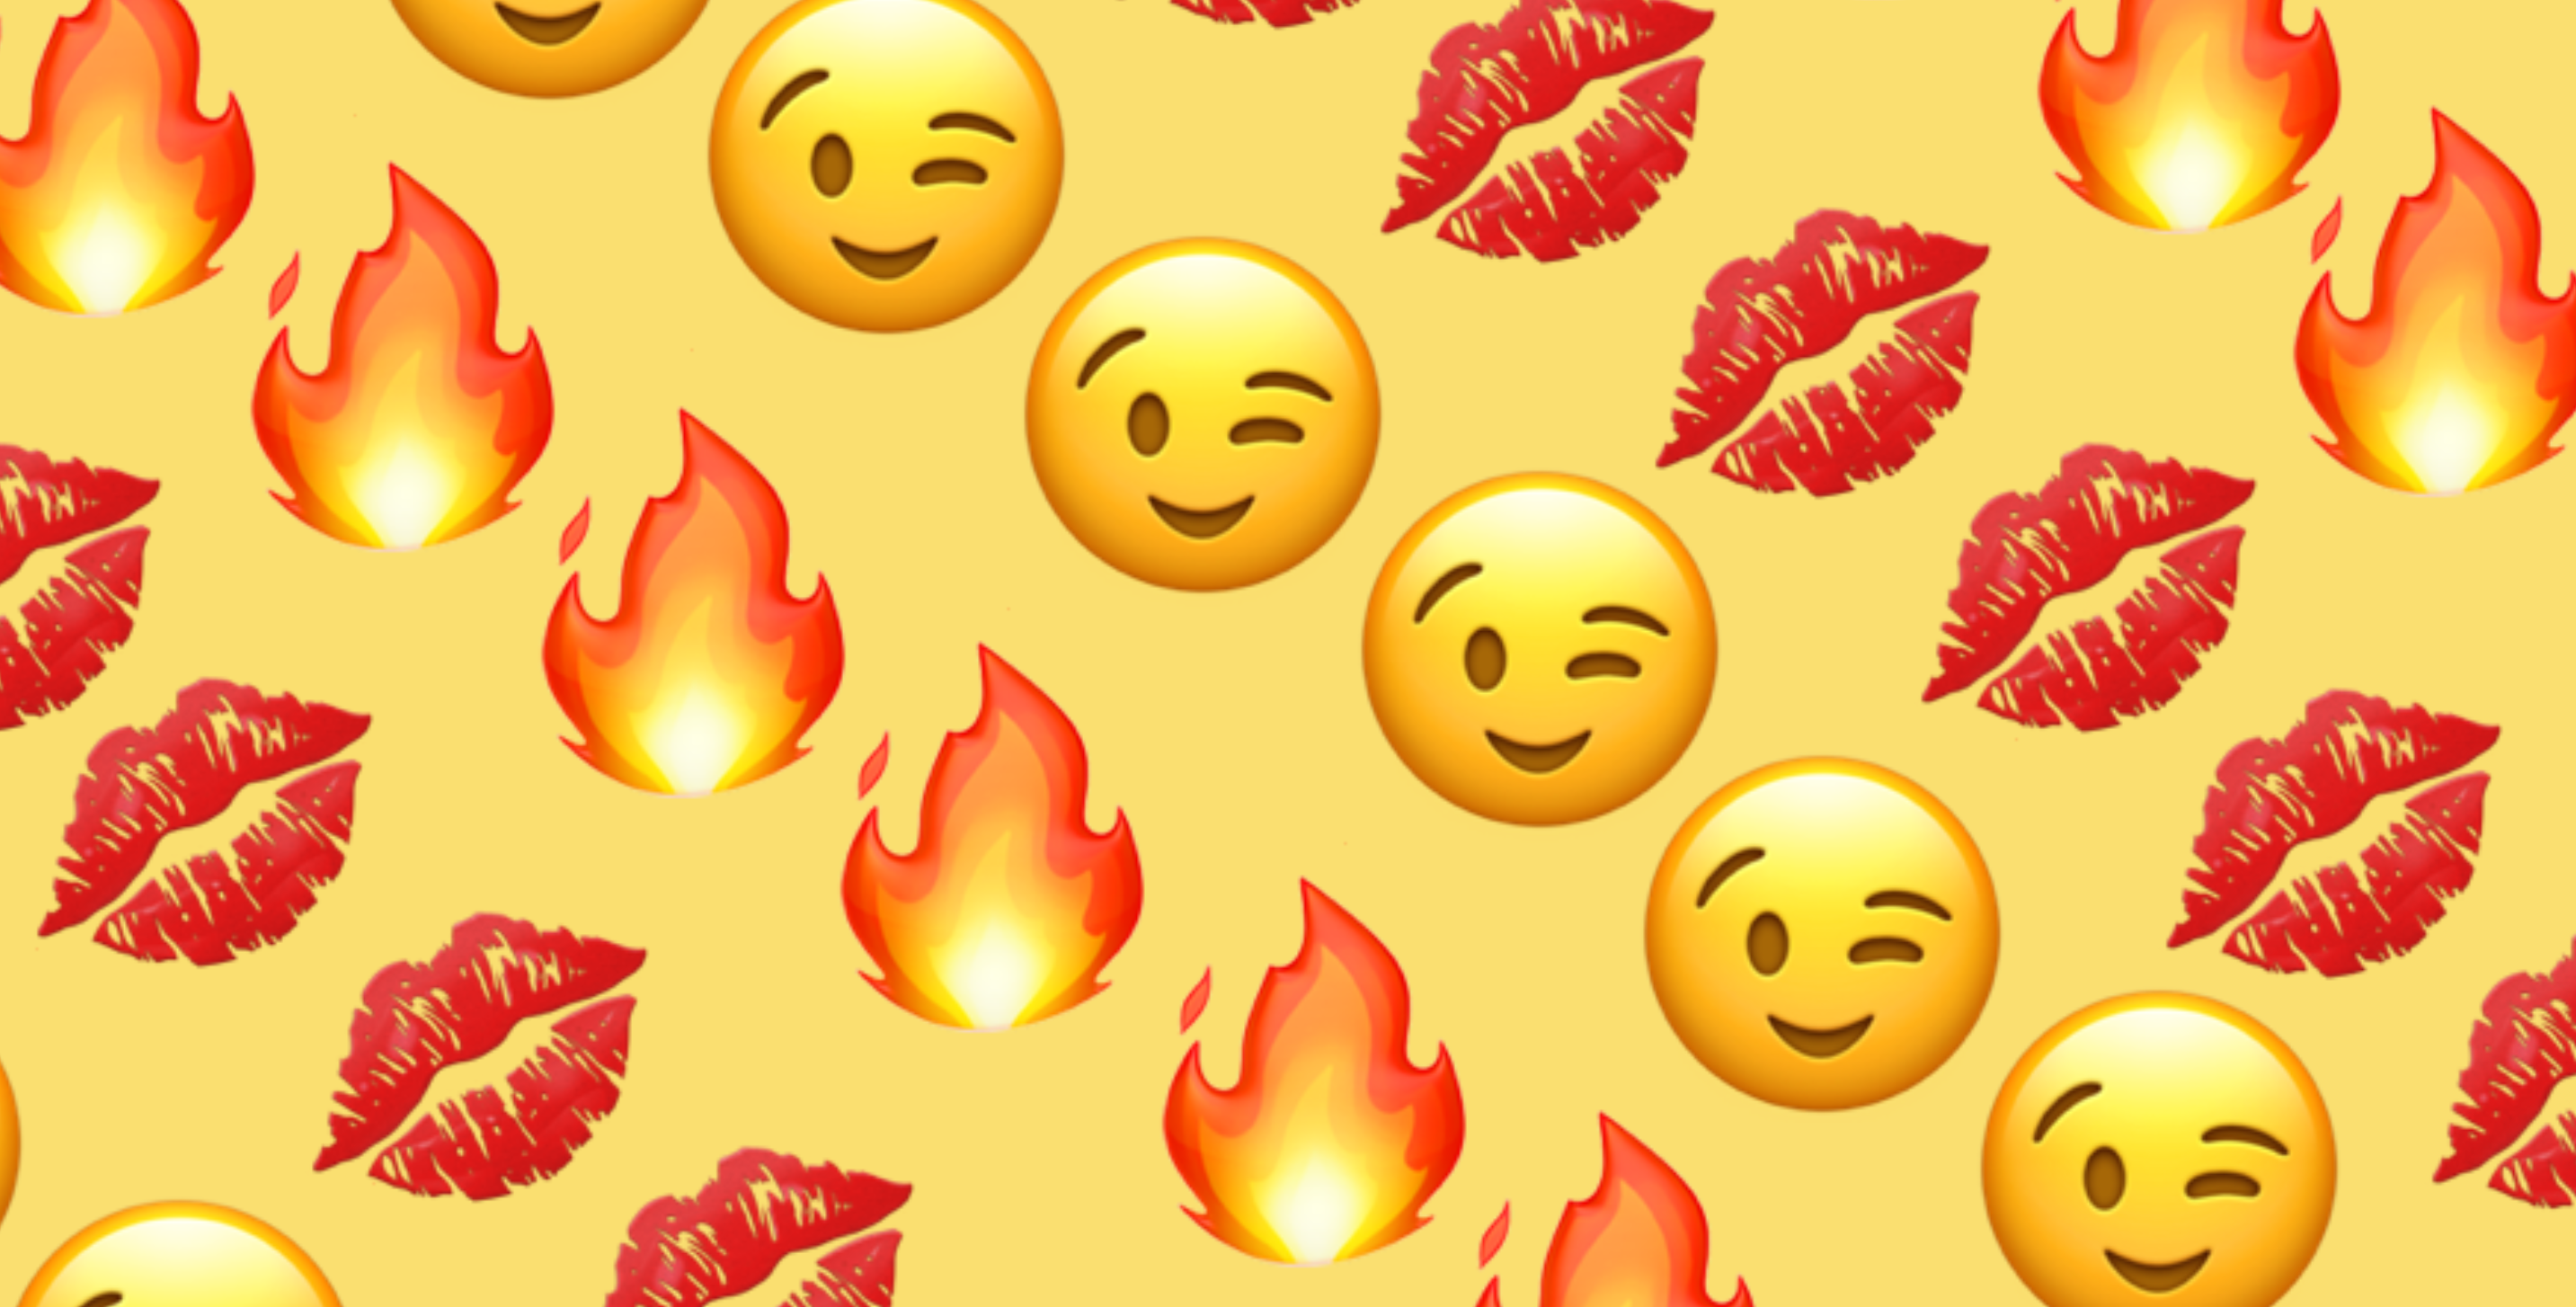 Flirting with emojis